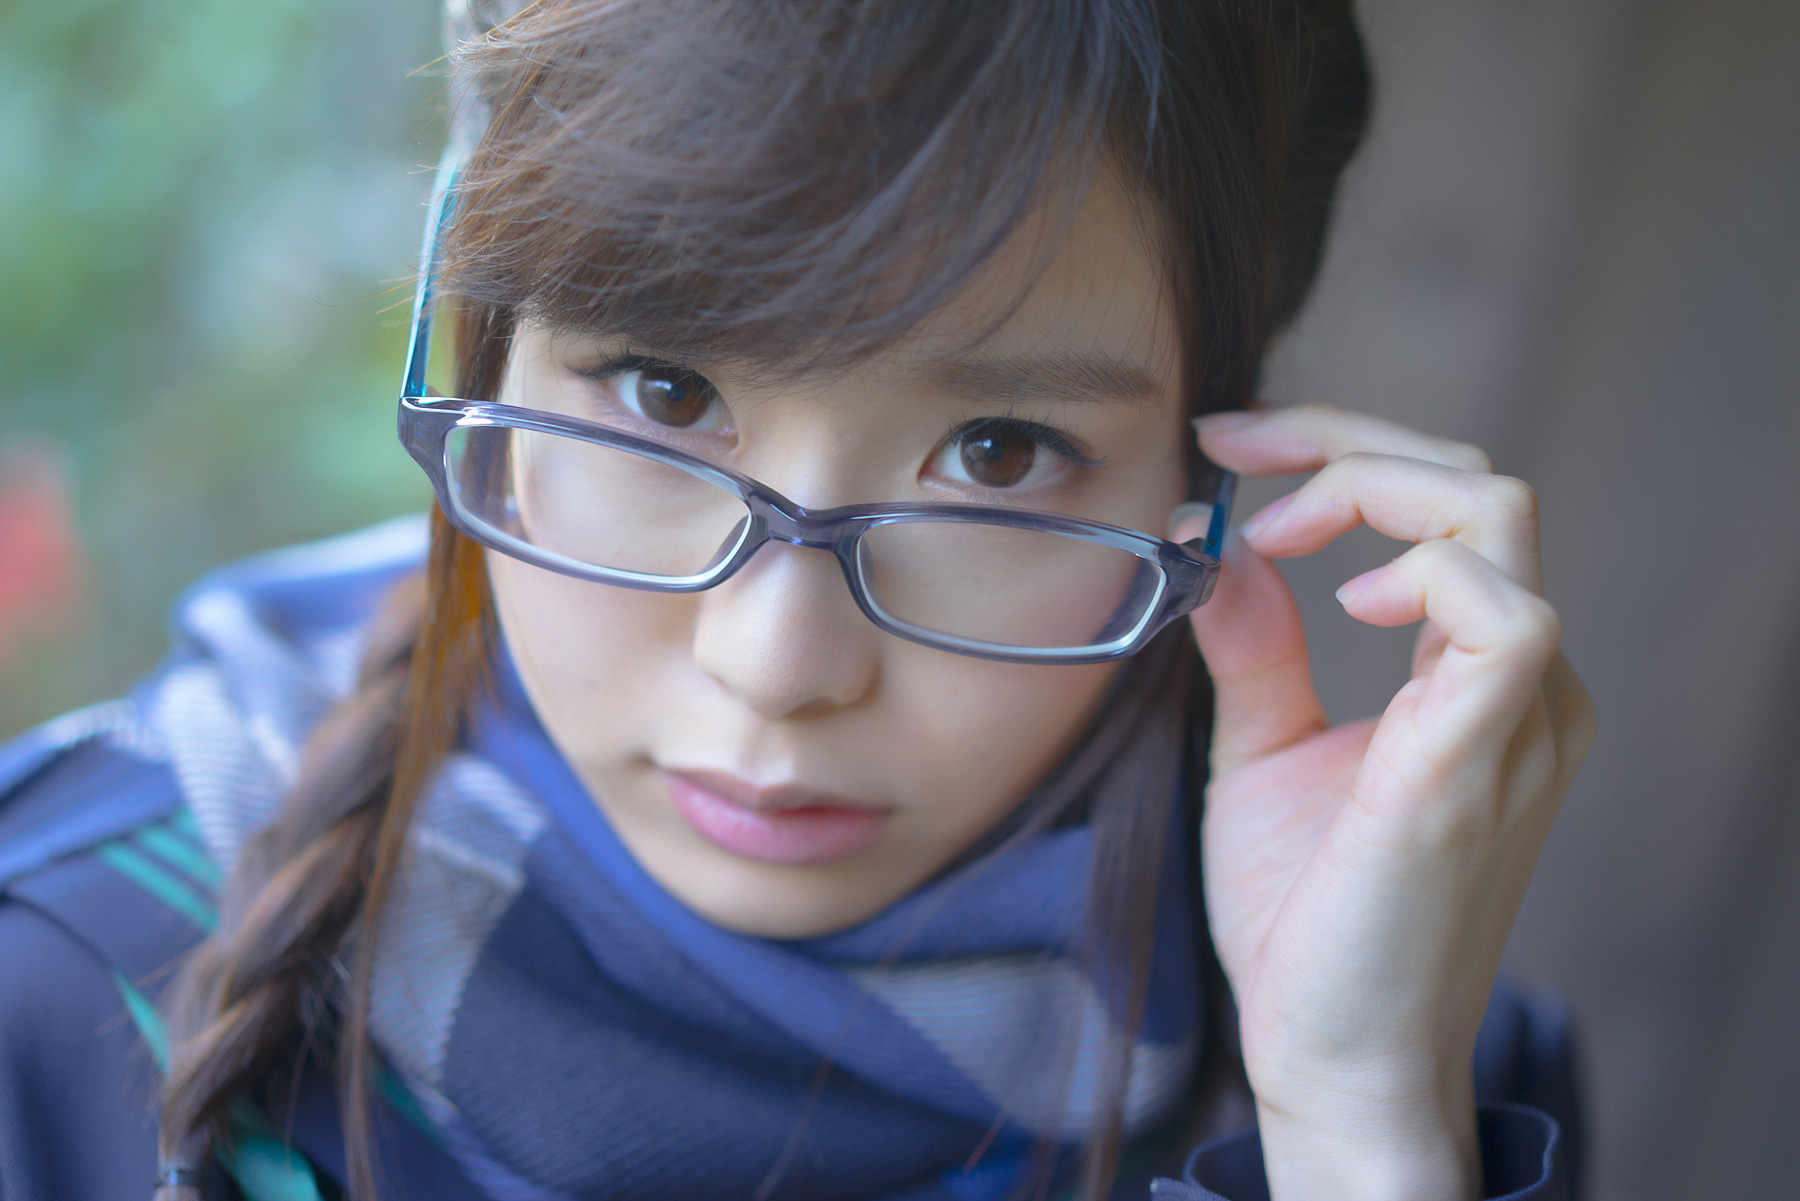 [LOVEPOP] Megumi Aisaka 逢坂愛 Photoset 01 写真集(37) -美女写真美女图片大全-高清美女图库 第33頁